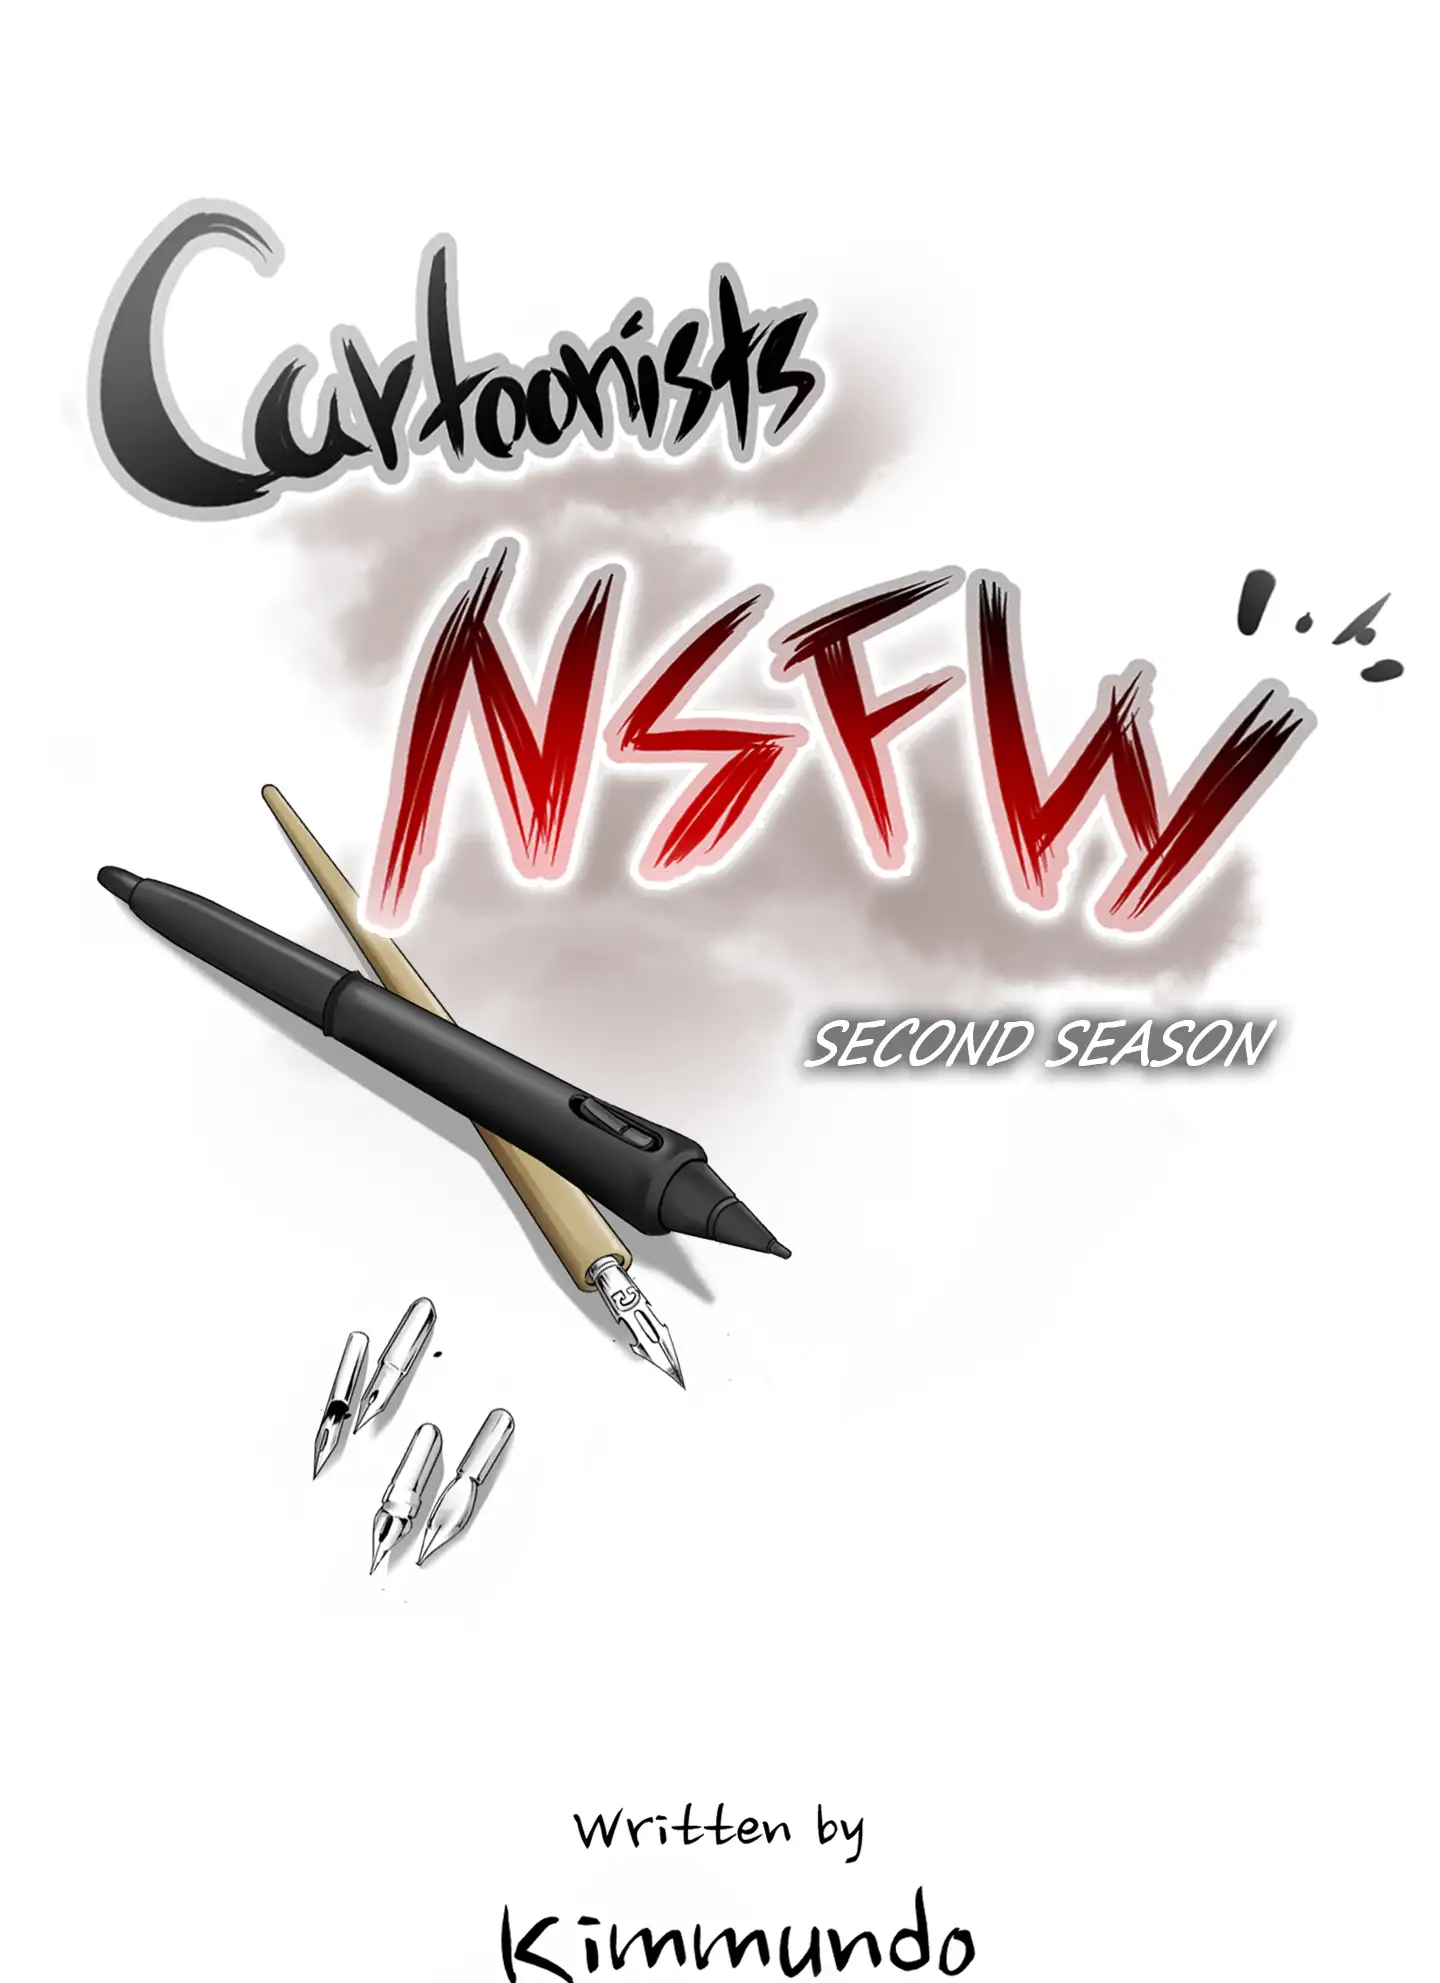 Cartoonists NSFW image